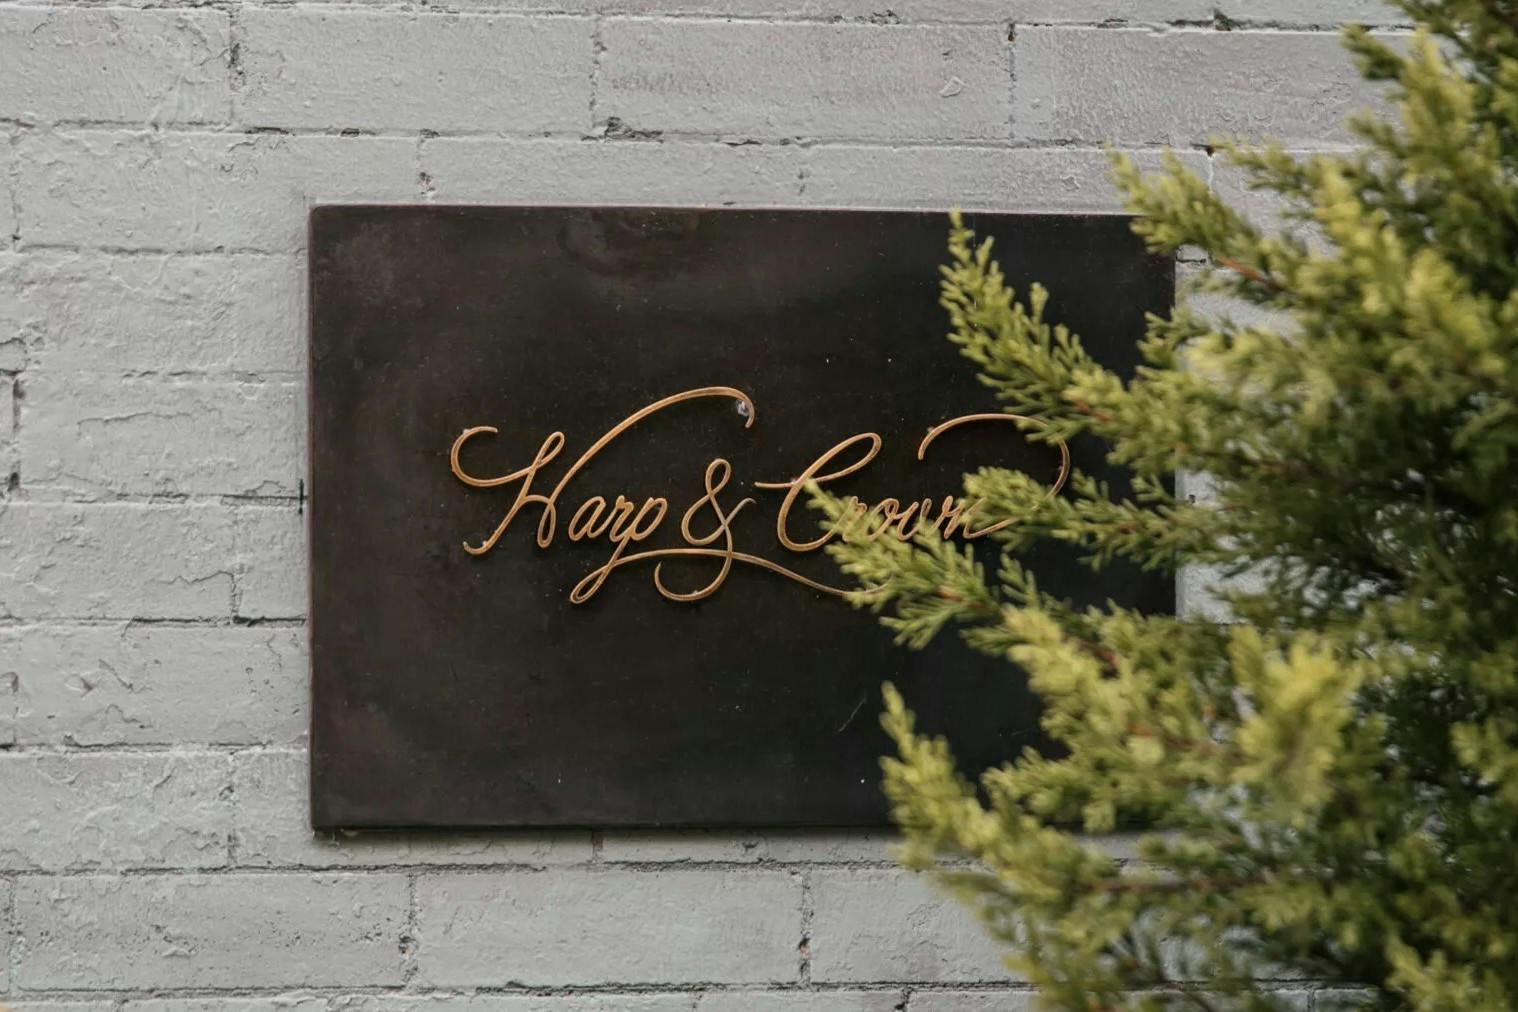 Harp & Crown Restaurant Branding featured image